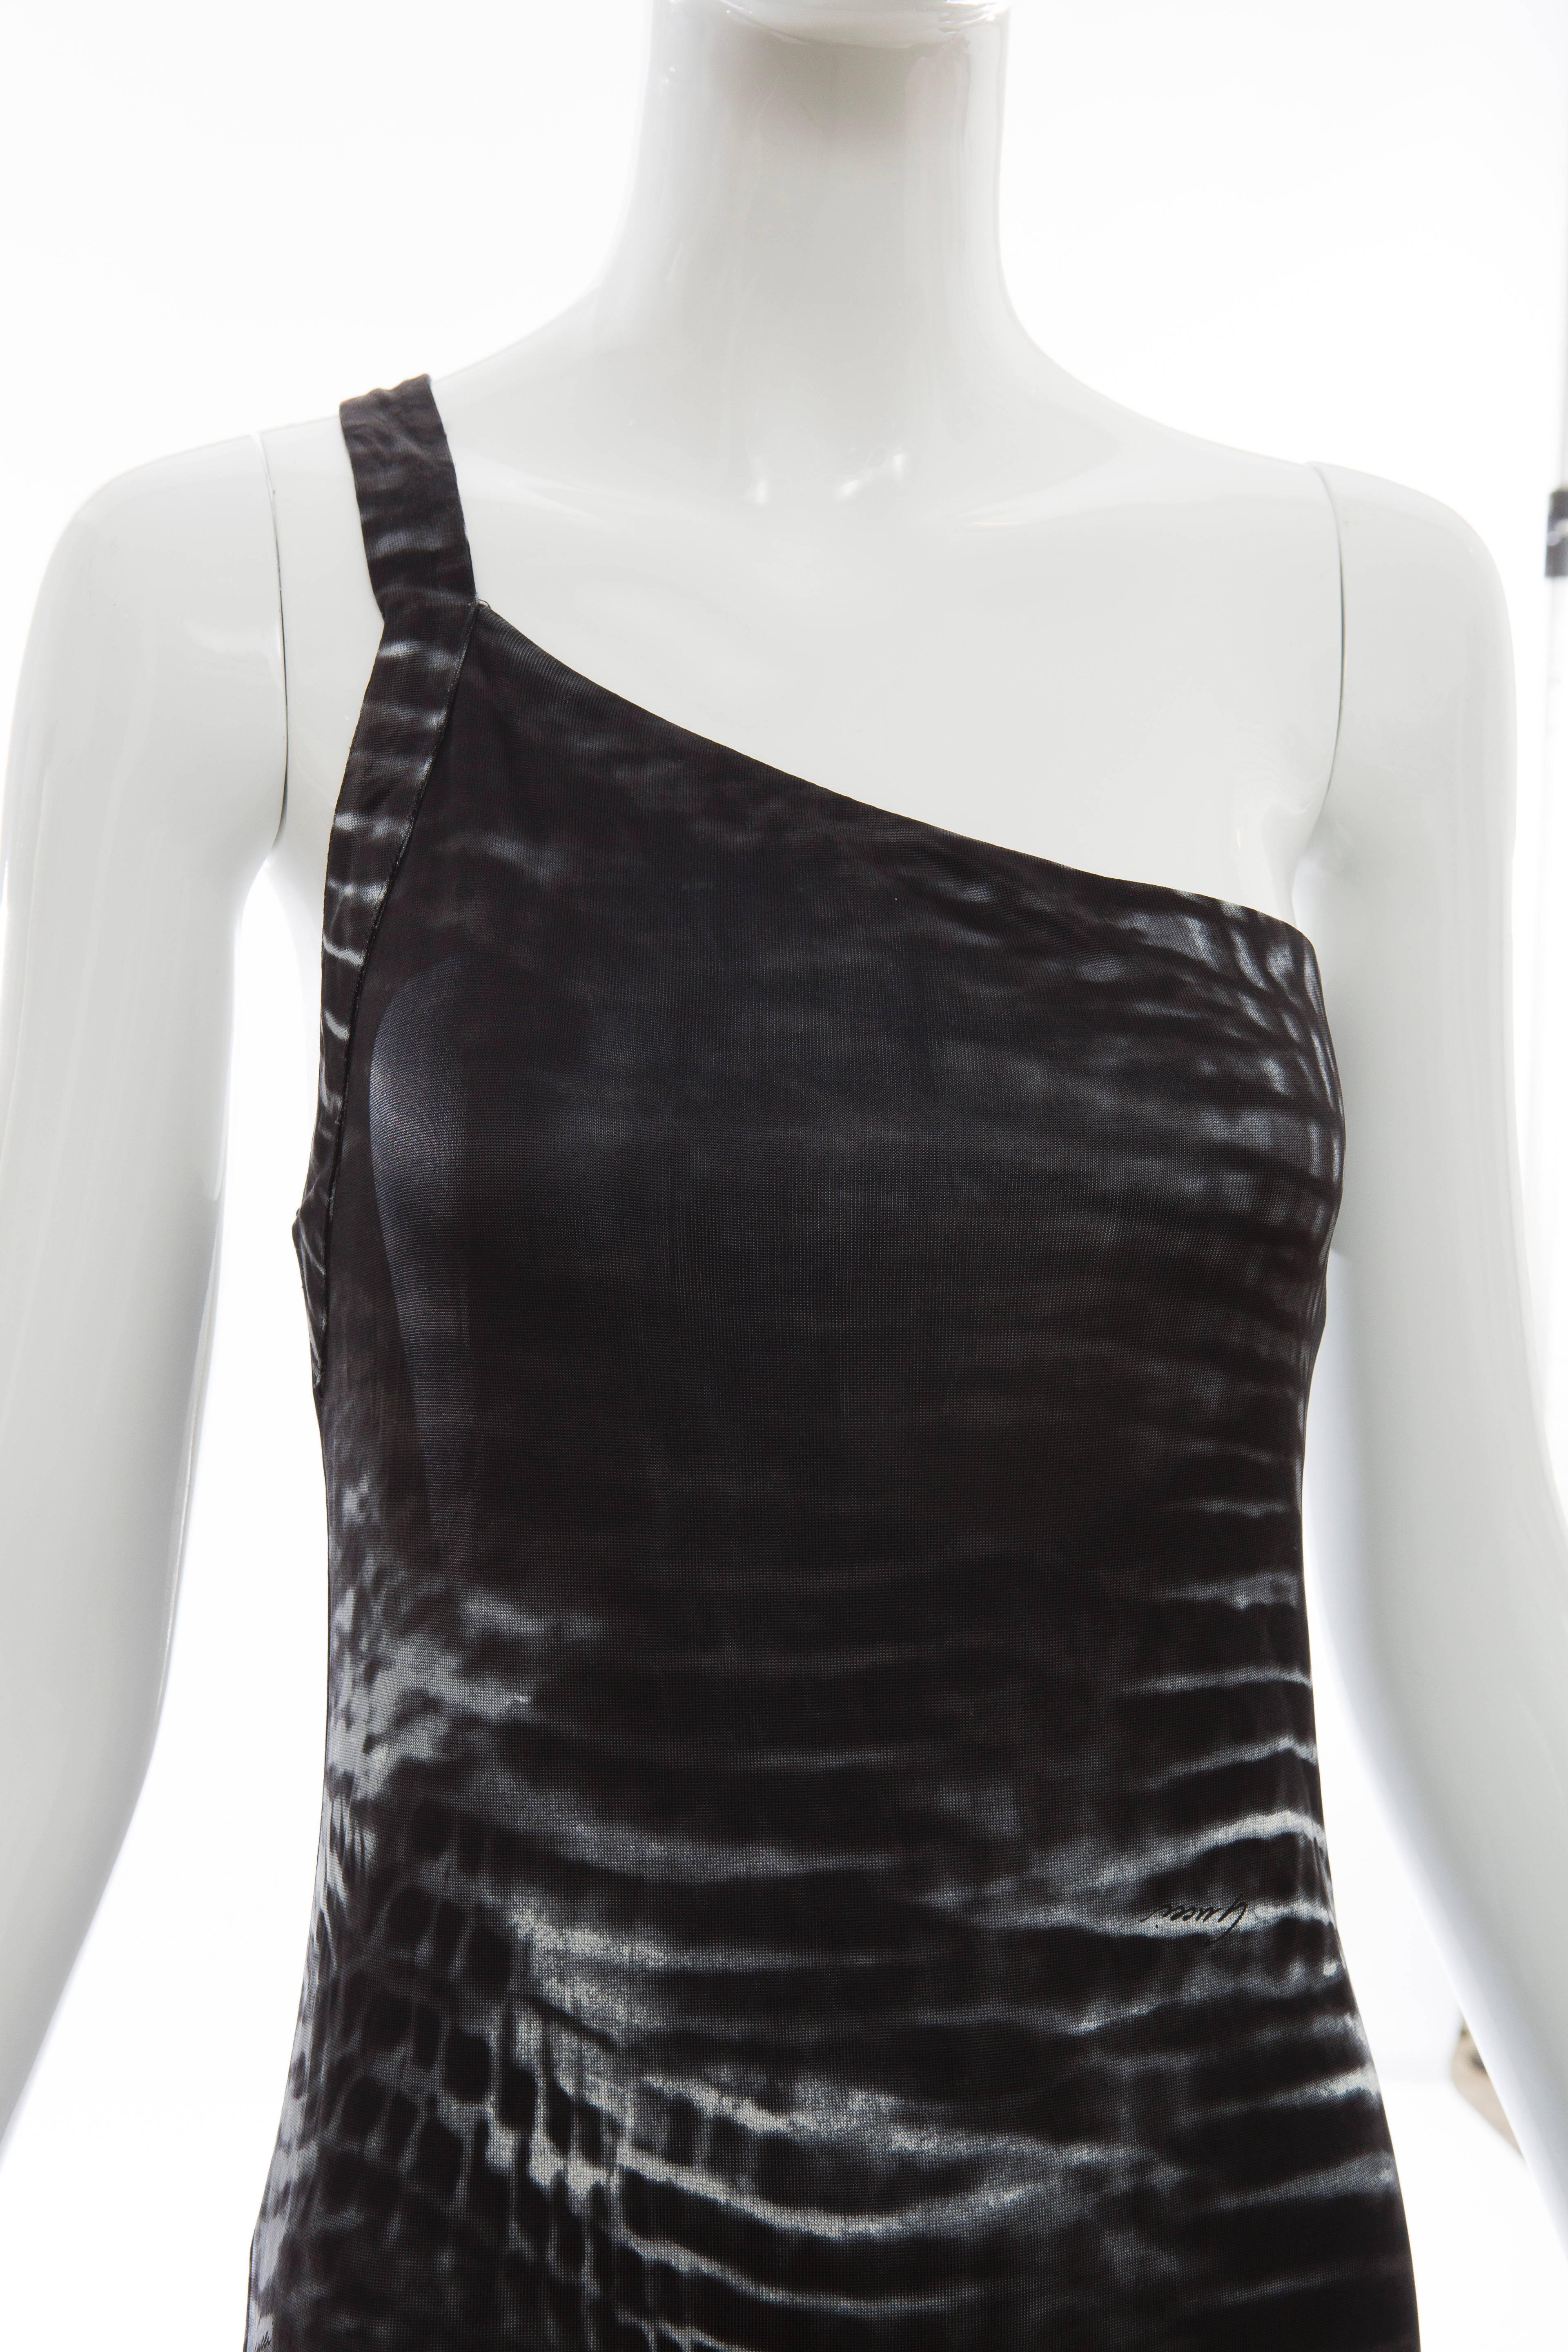 Tom Ford for Gucci Runway Black One-Shoulder Printed Dress , Spring 2000 For Sale 2